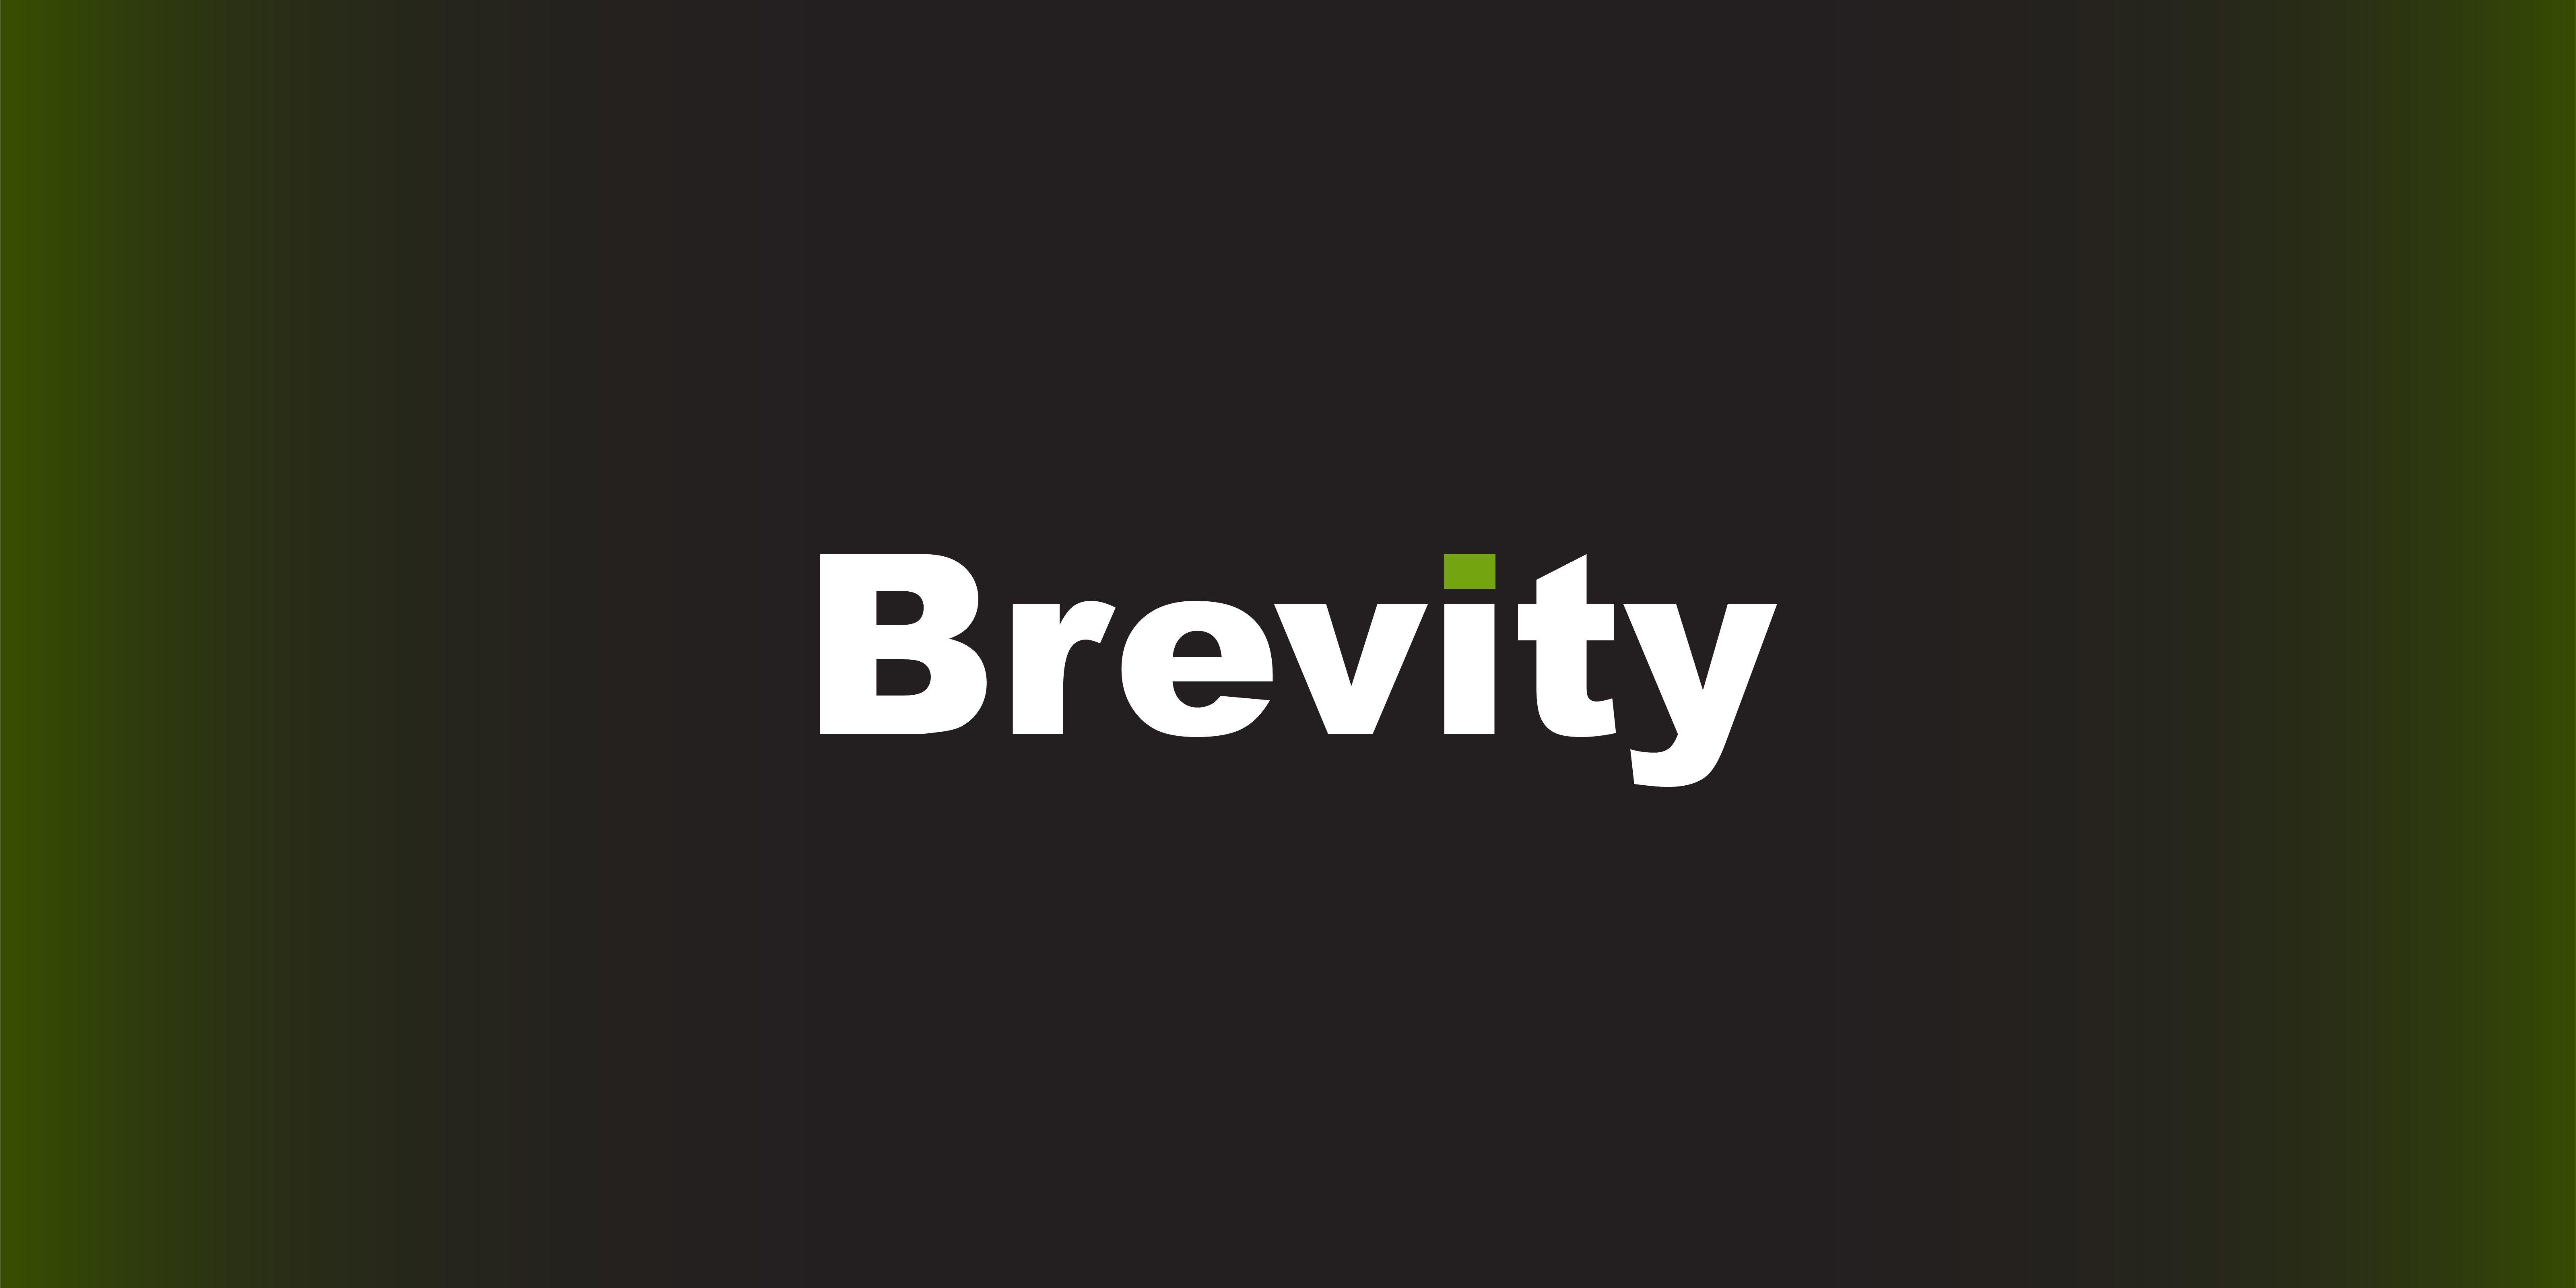 Abrevity Logo - Brevity | LinkedIn